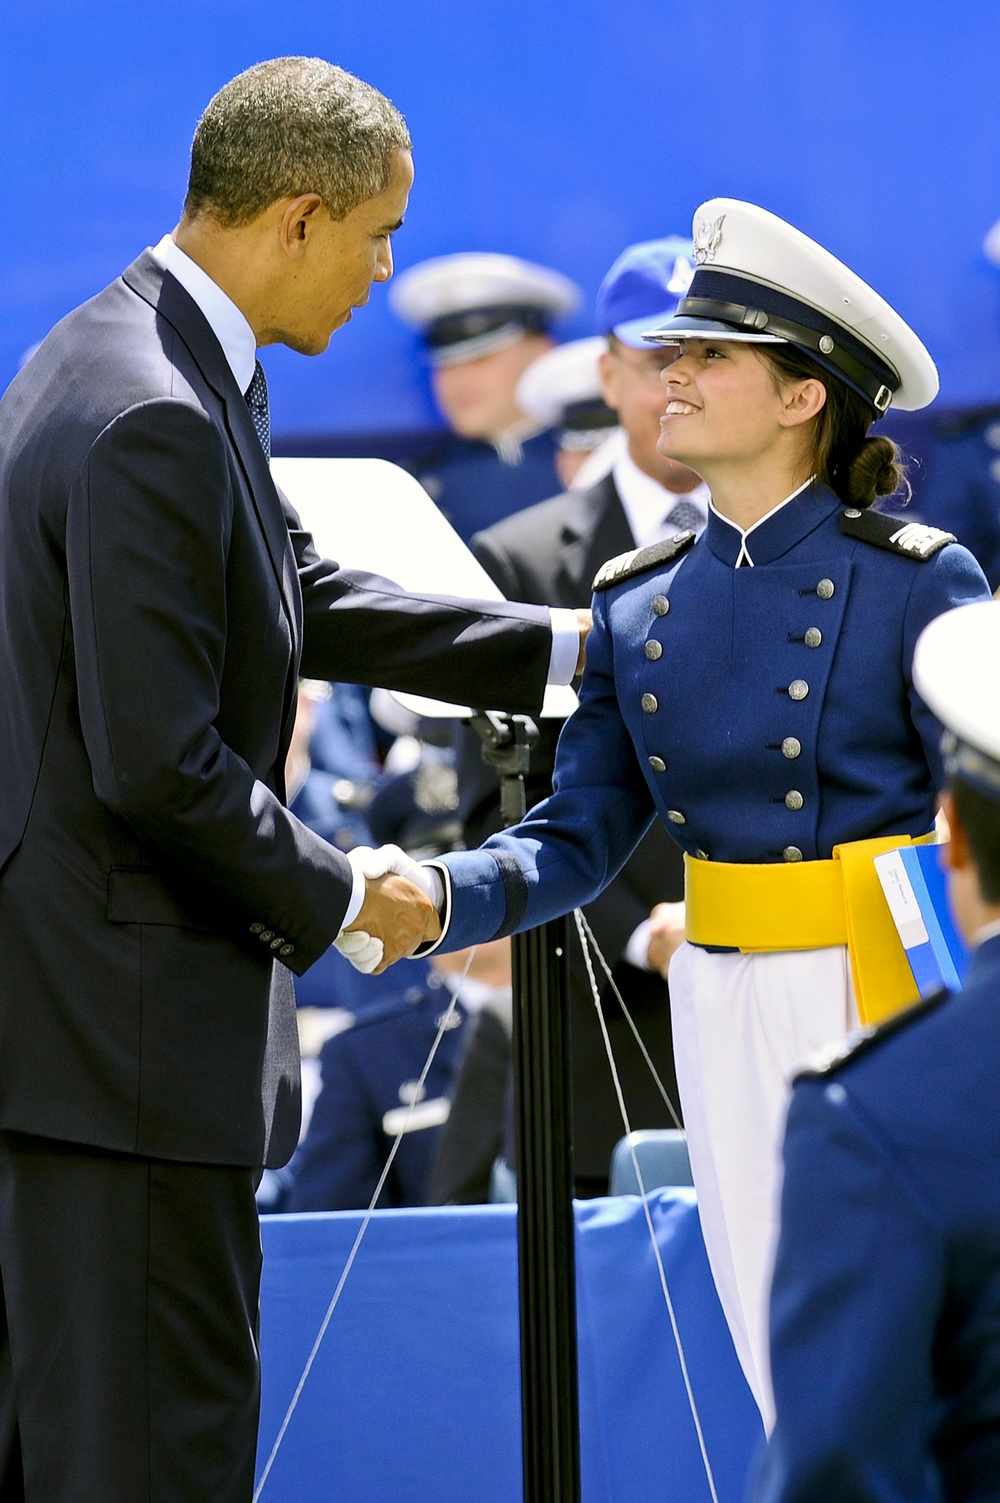 Air Force Academy graduation ceremony